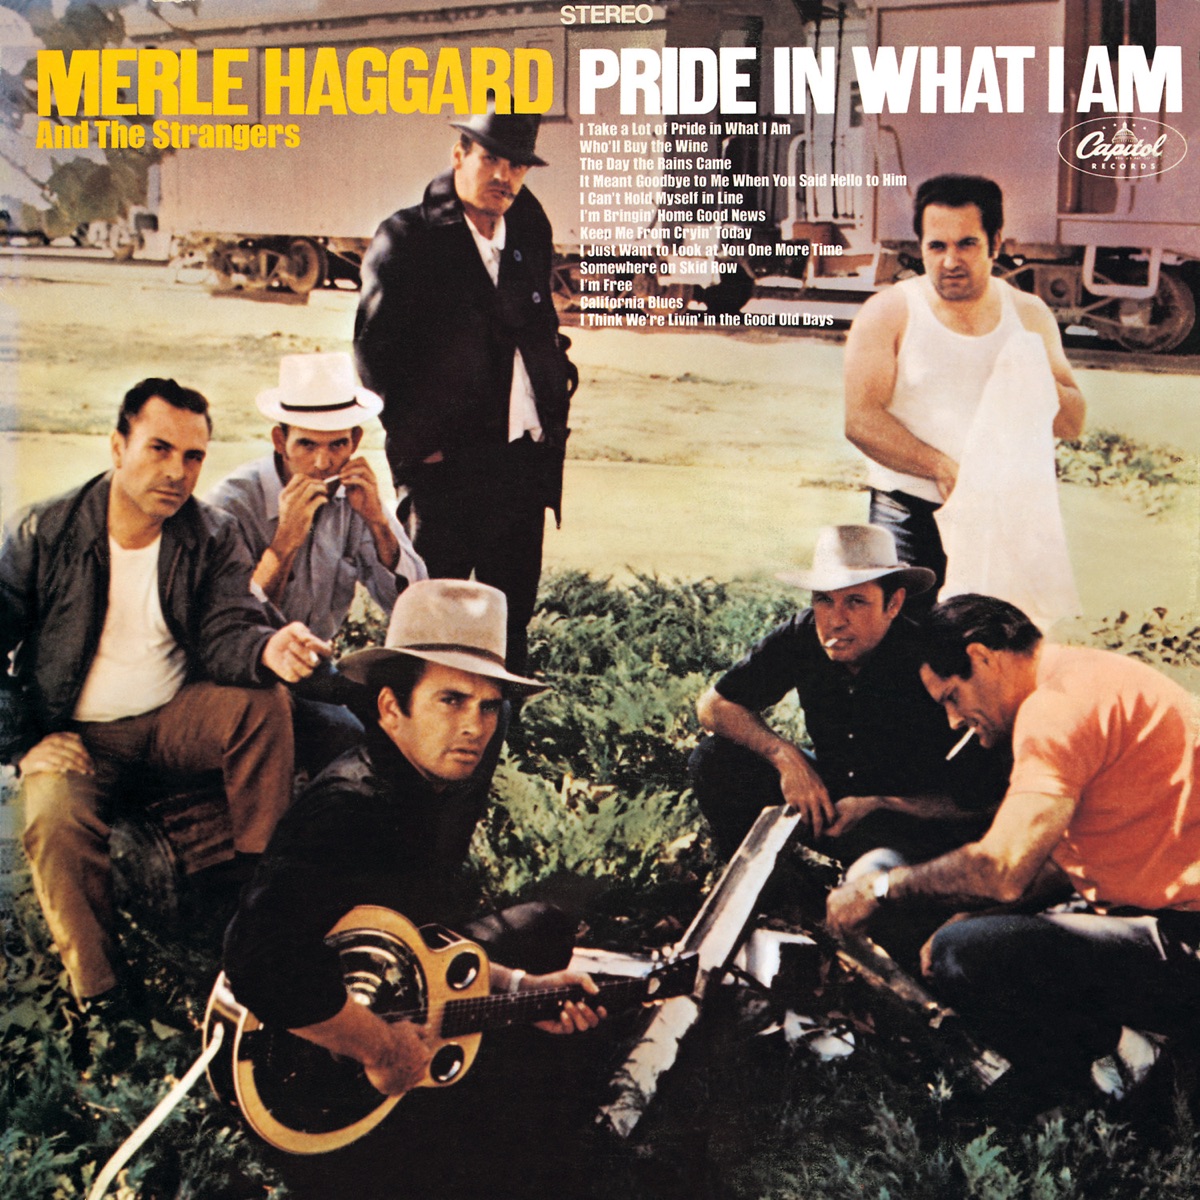 Merle Haggard's Christmas Present by Merle Haggard & The Strangers